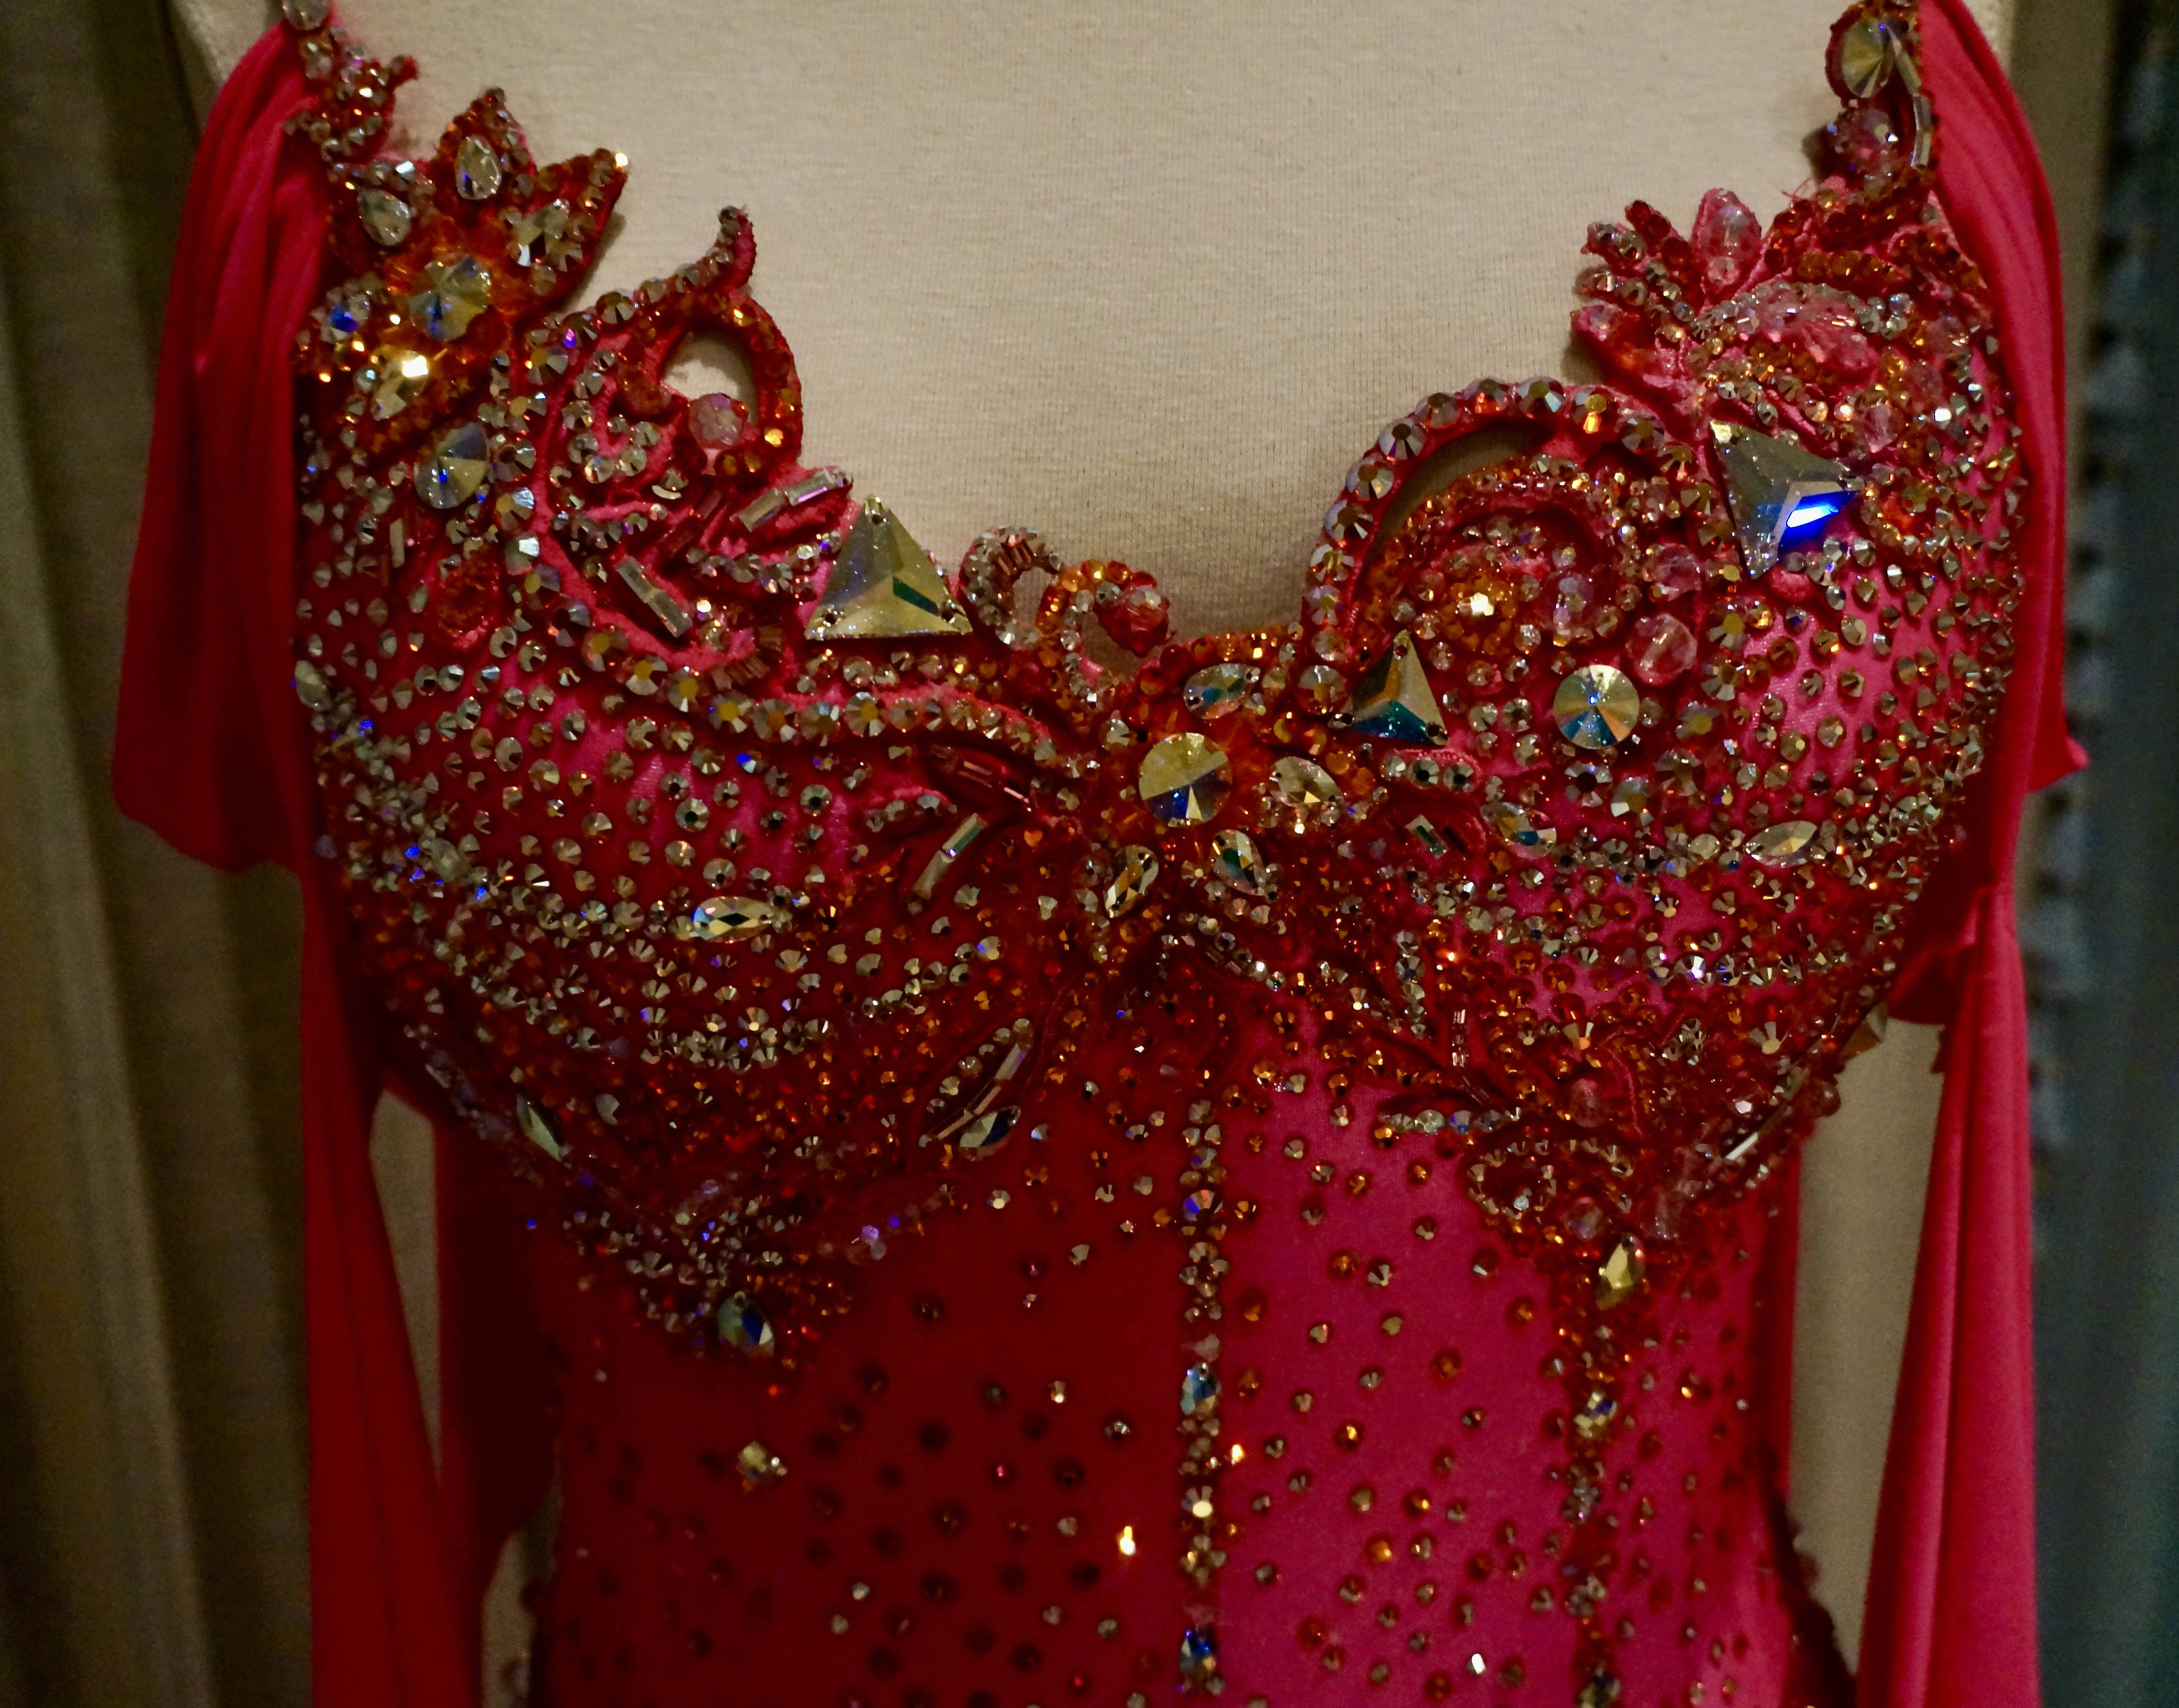 Striking Pink Smooth Dress (ballroom dress for sale, standard, modern)